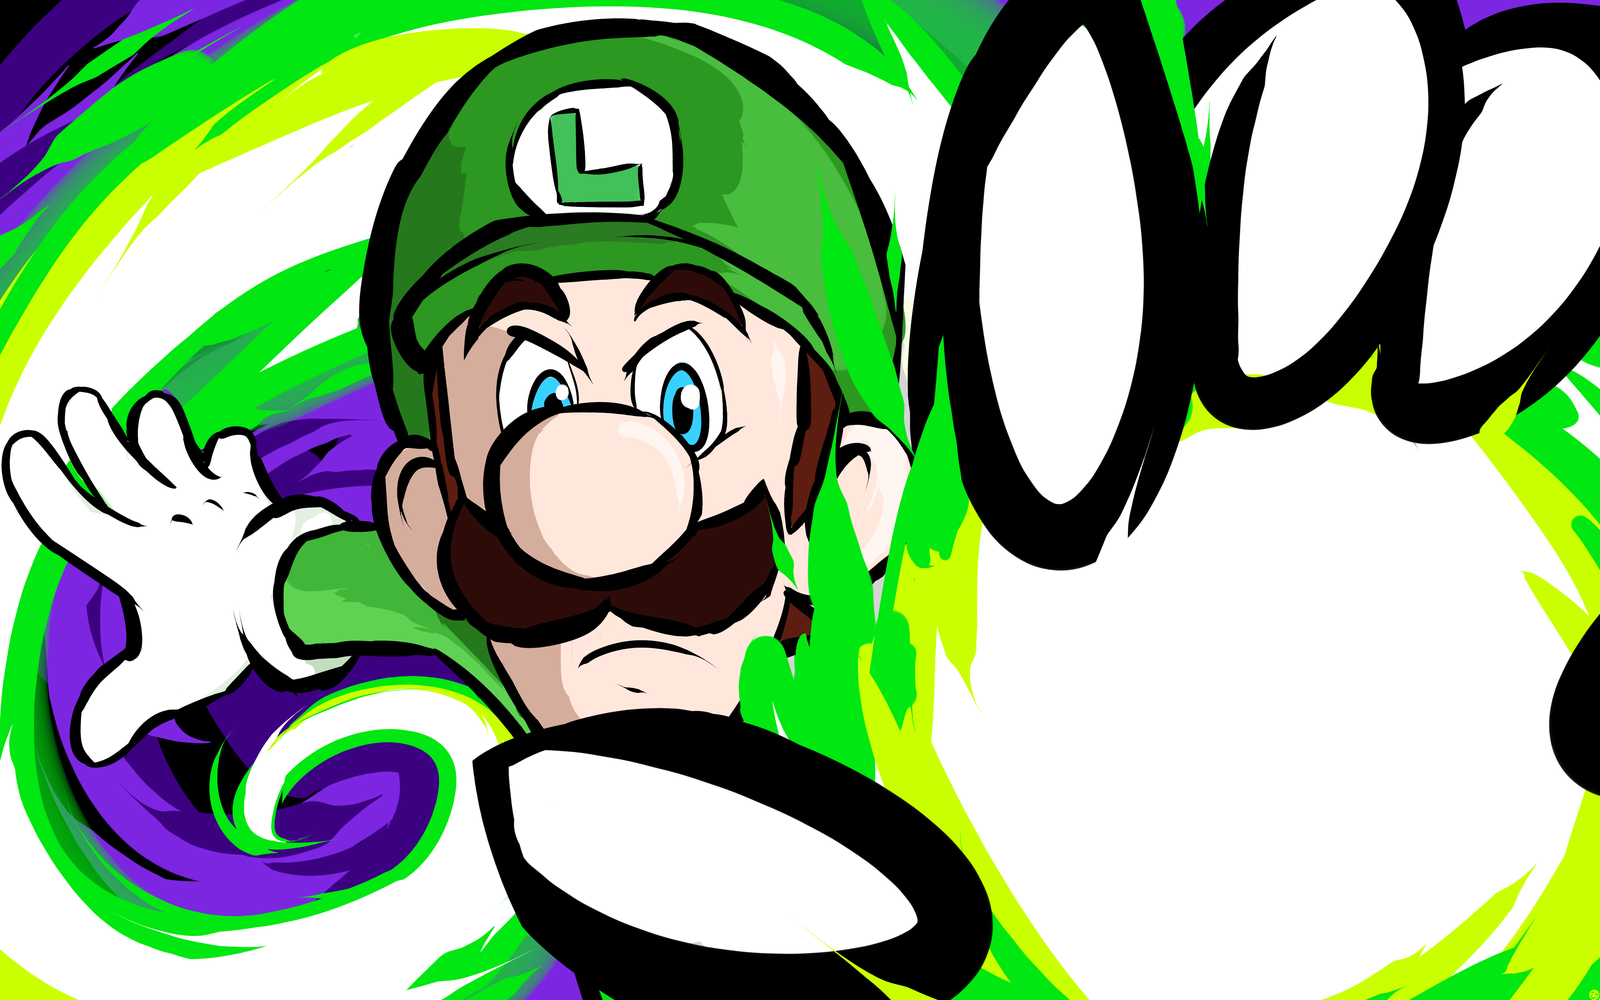 General 1600x1000 ishmam Super Mario Mario Bros. Luigi video games artwork video game art DeviantArt Video Game Heroes video game characters aqua eyes